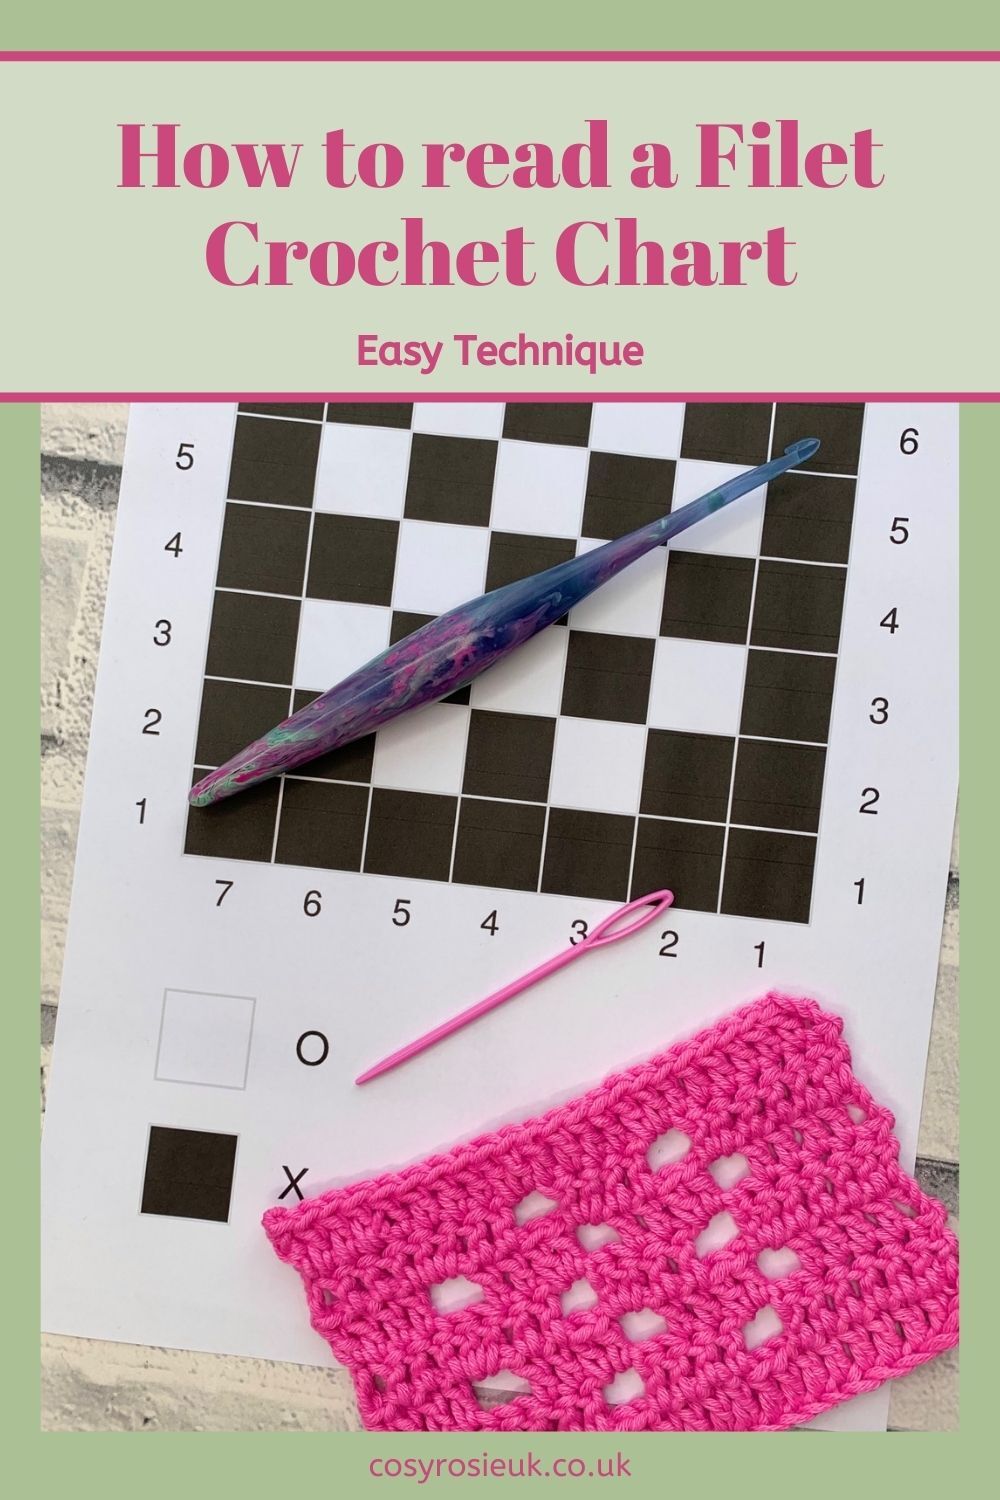 Learn how to read a filet crochet chart